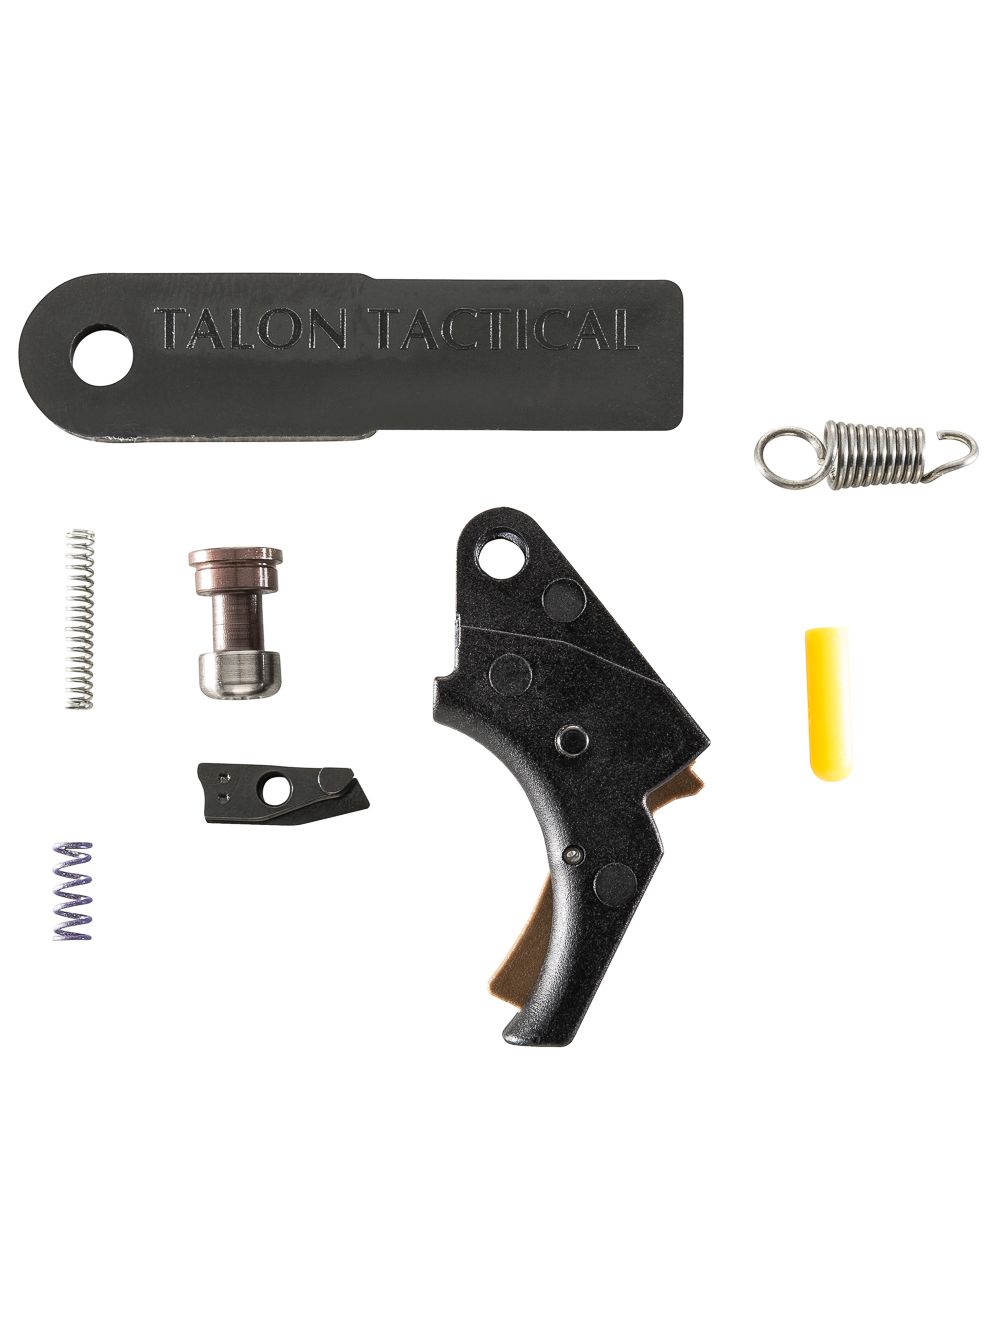 Action Enhancement Trigger Kit for M&P M2.0